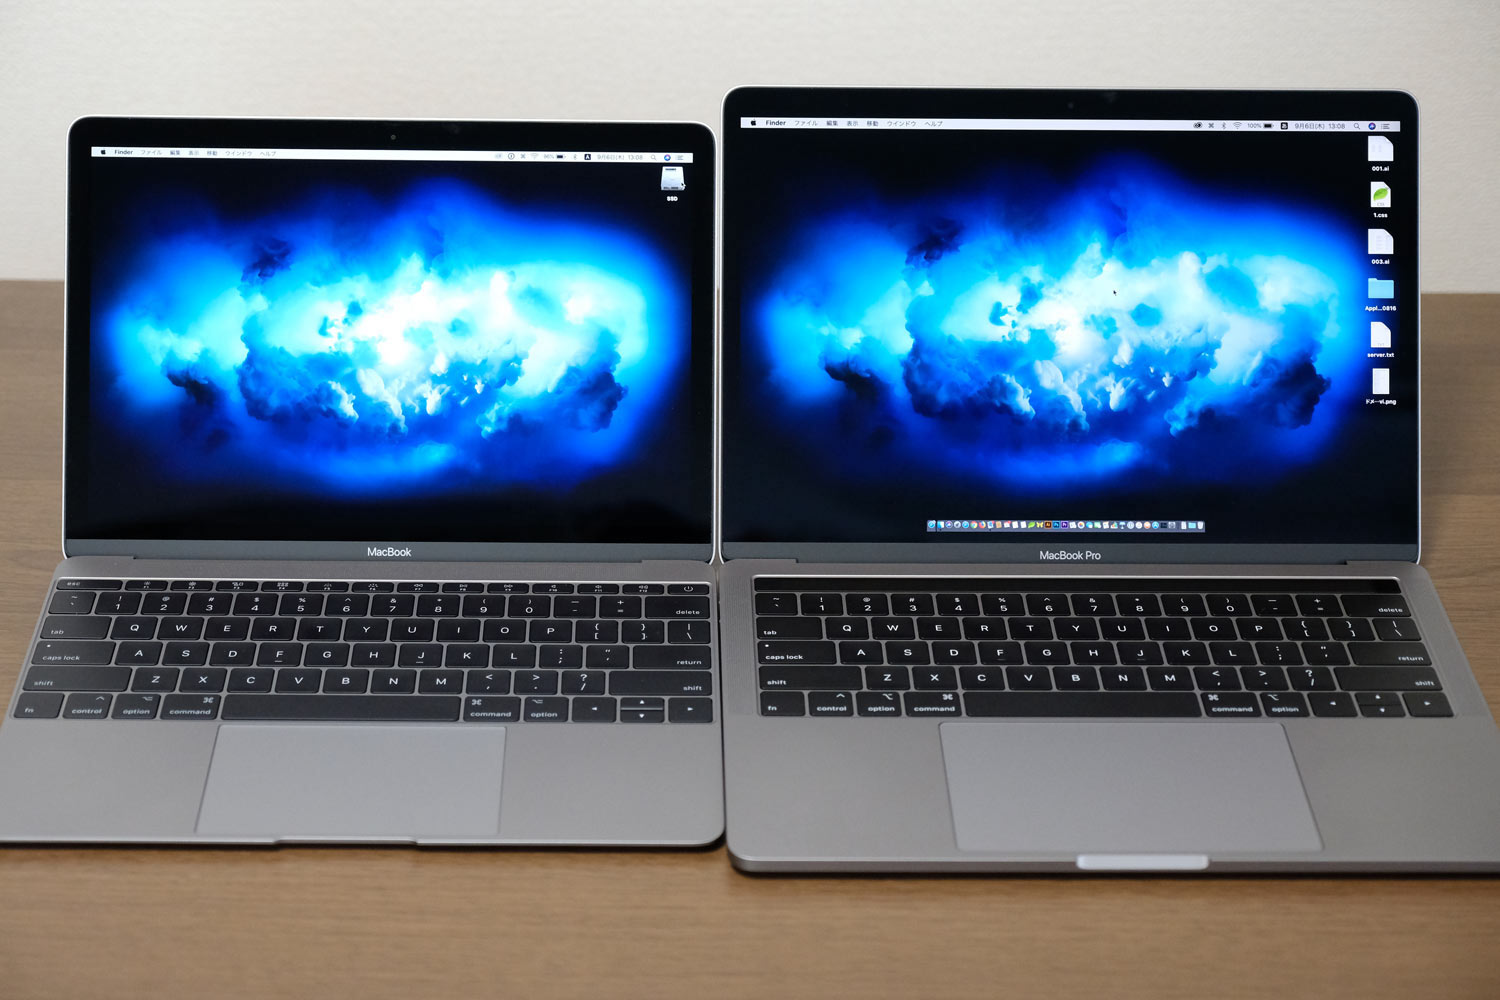 MacBook 12インチ・MacBook Pro 13インチ 外観の違い